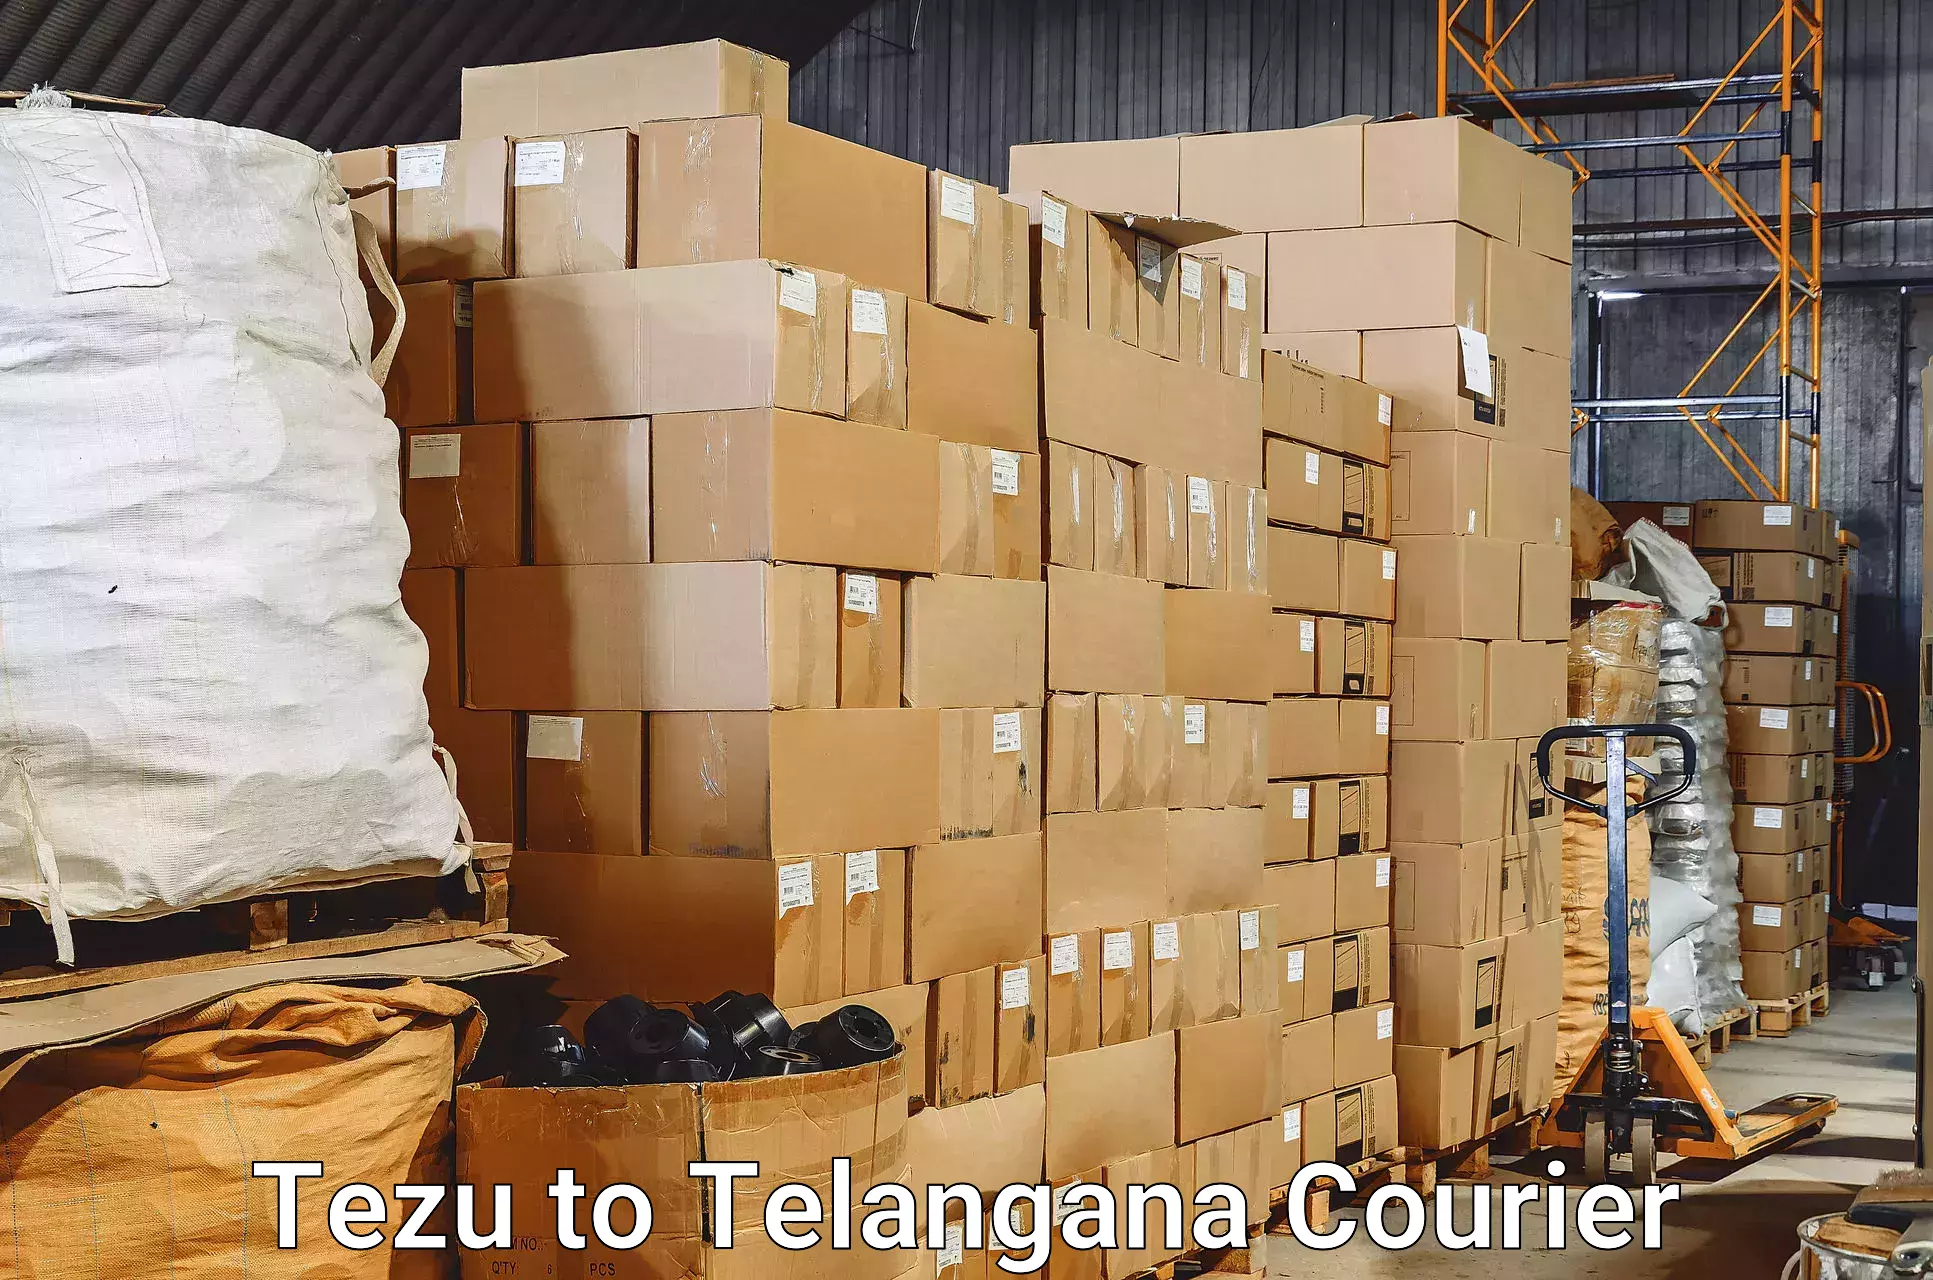 Luggage shipment processing in Tezu to Tadvai